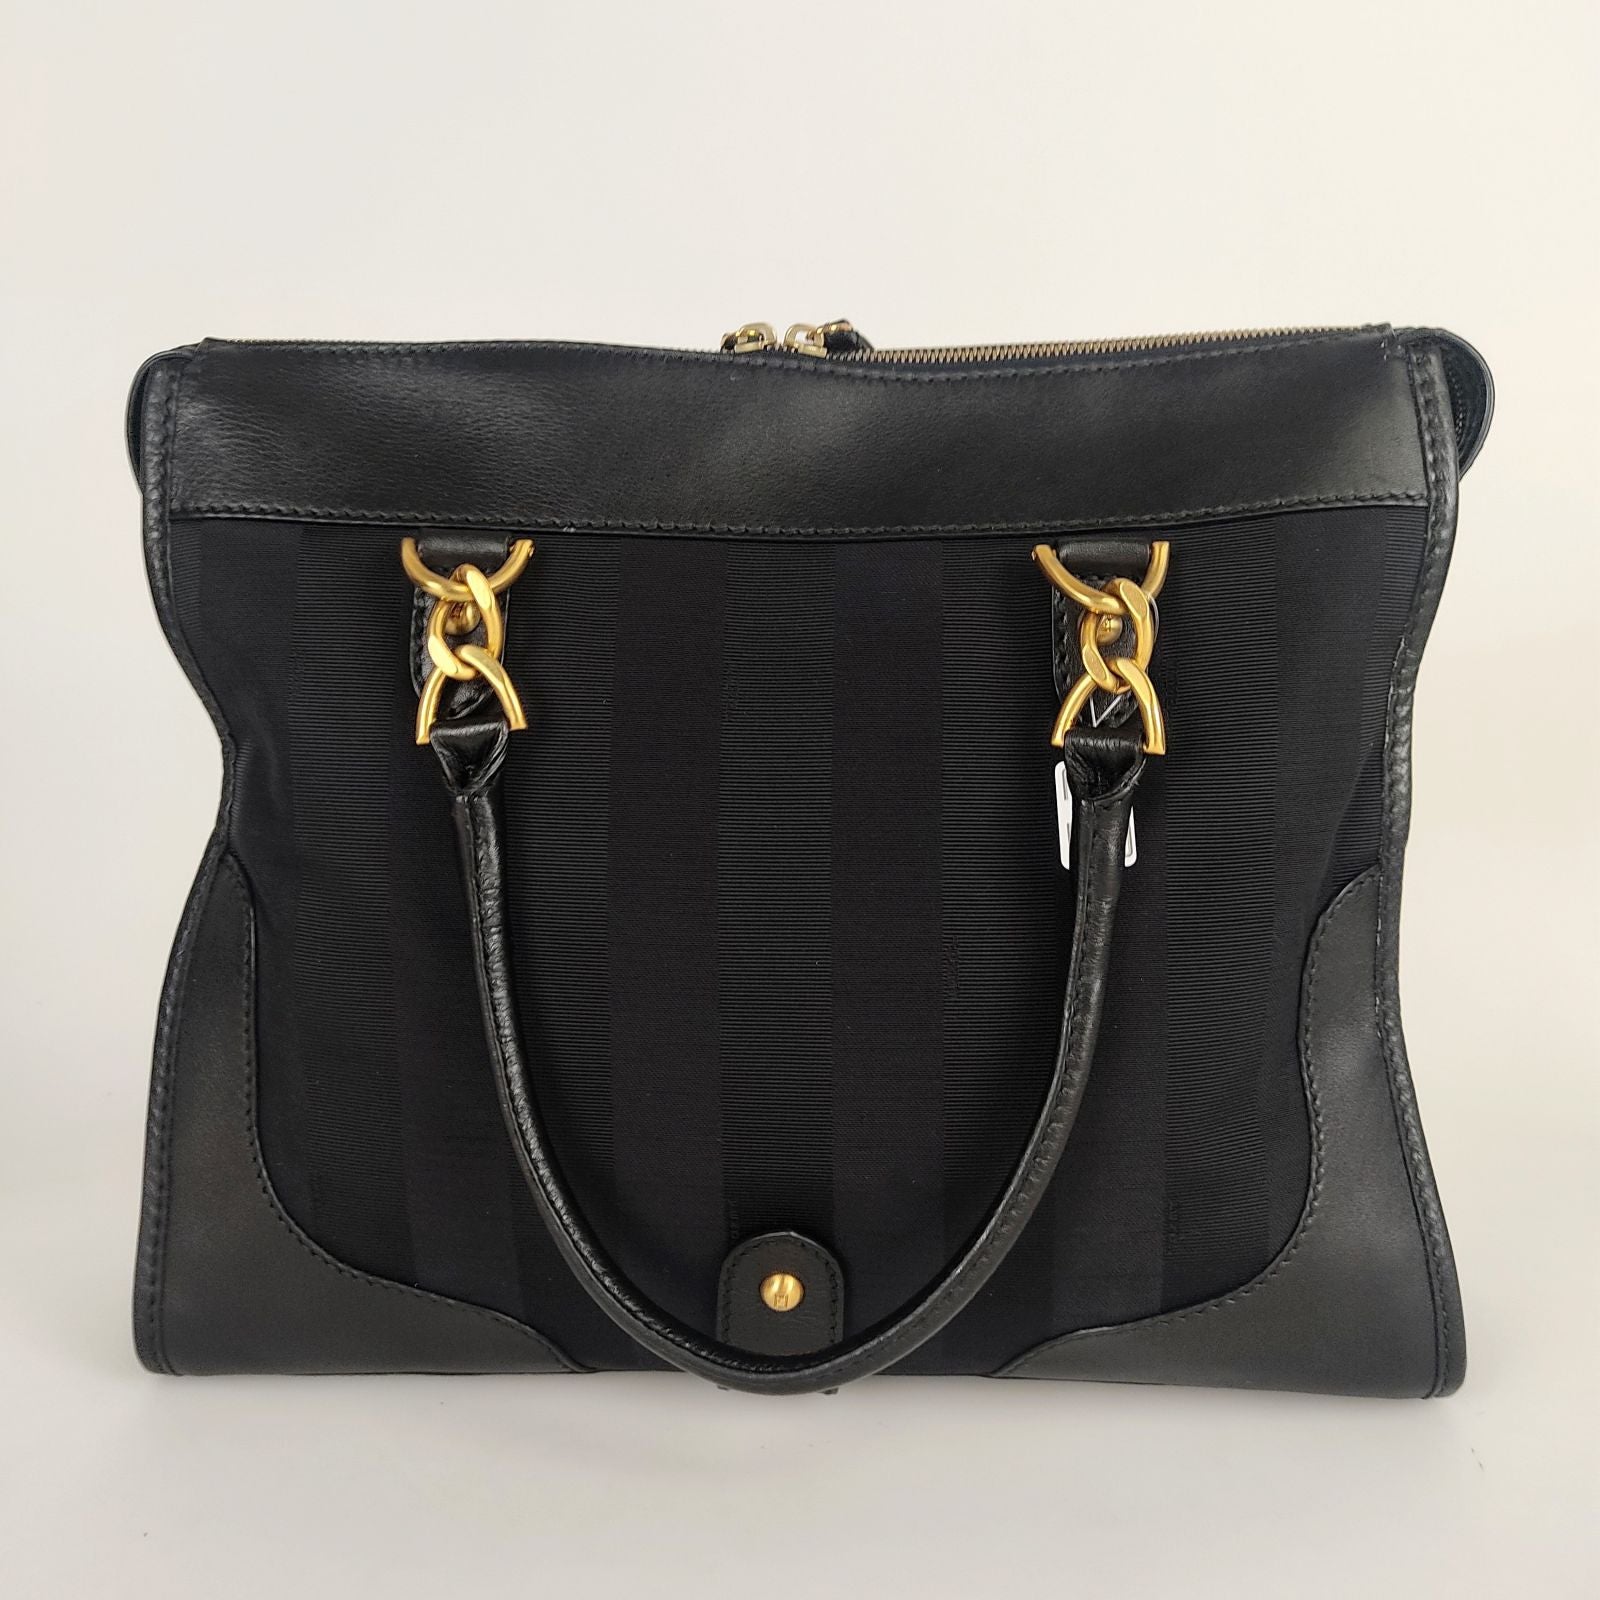 Fendi Fendi handbag in Pacan canvas and black leather - '10s